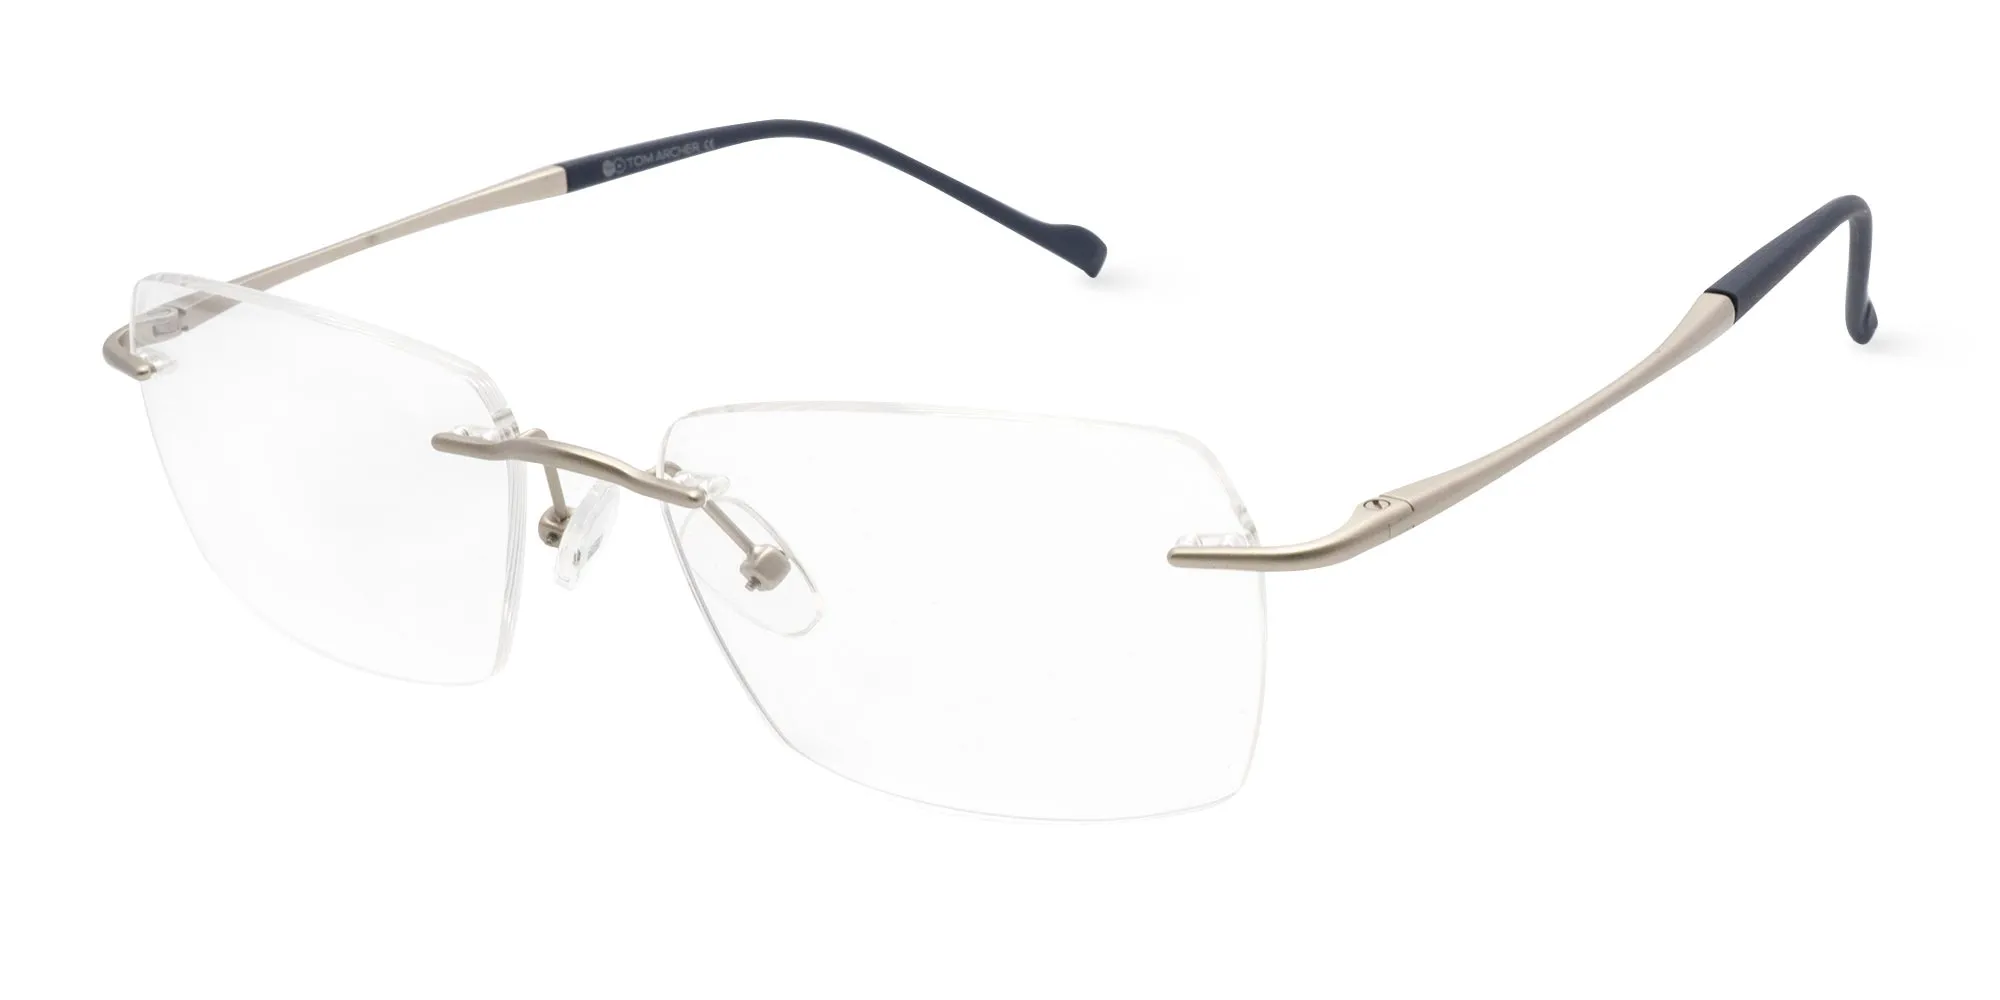 Silver Rimless Glasses Frames -2